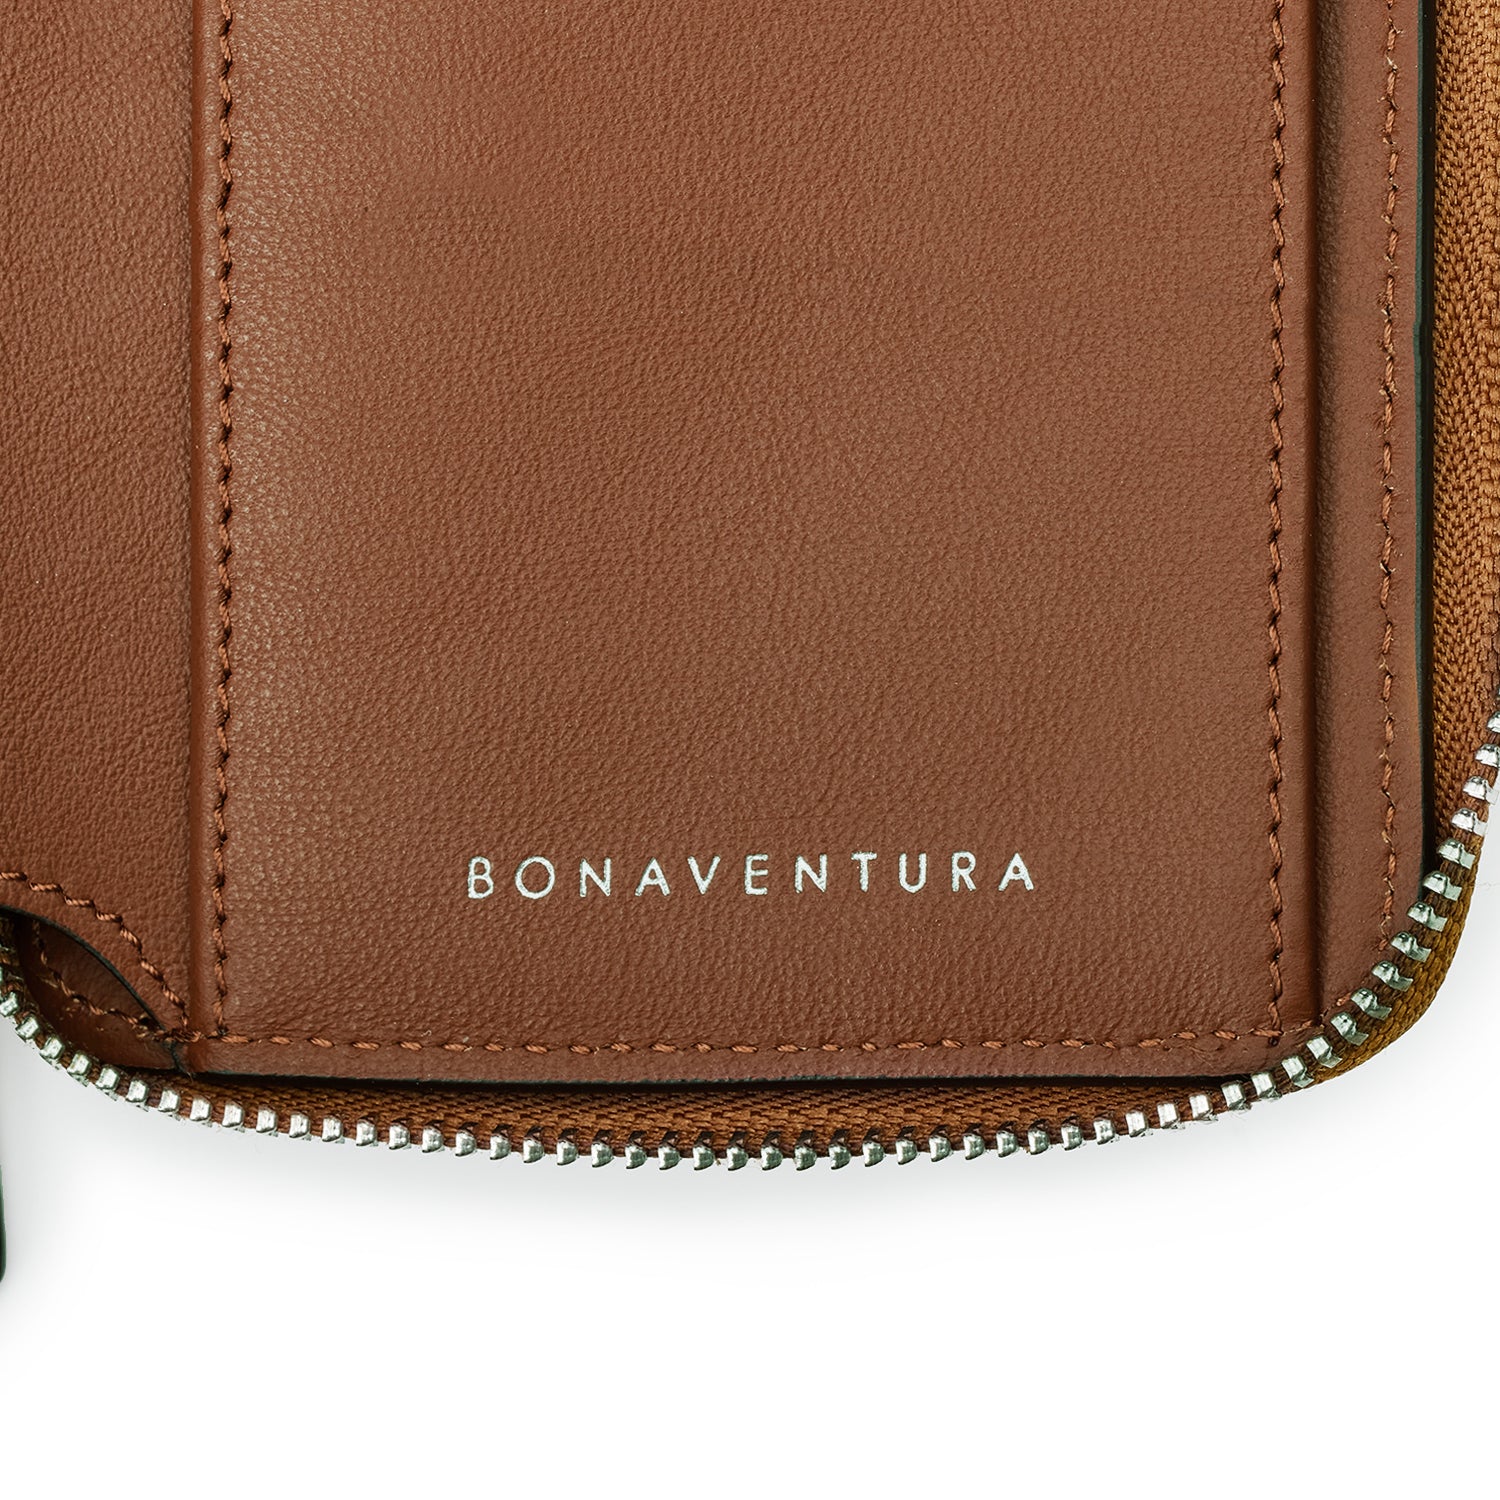 Medium zip wallet in smooth leather